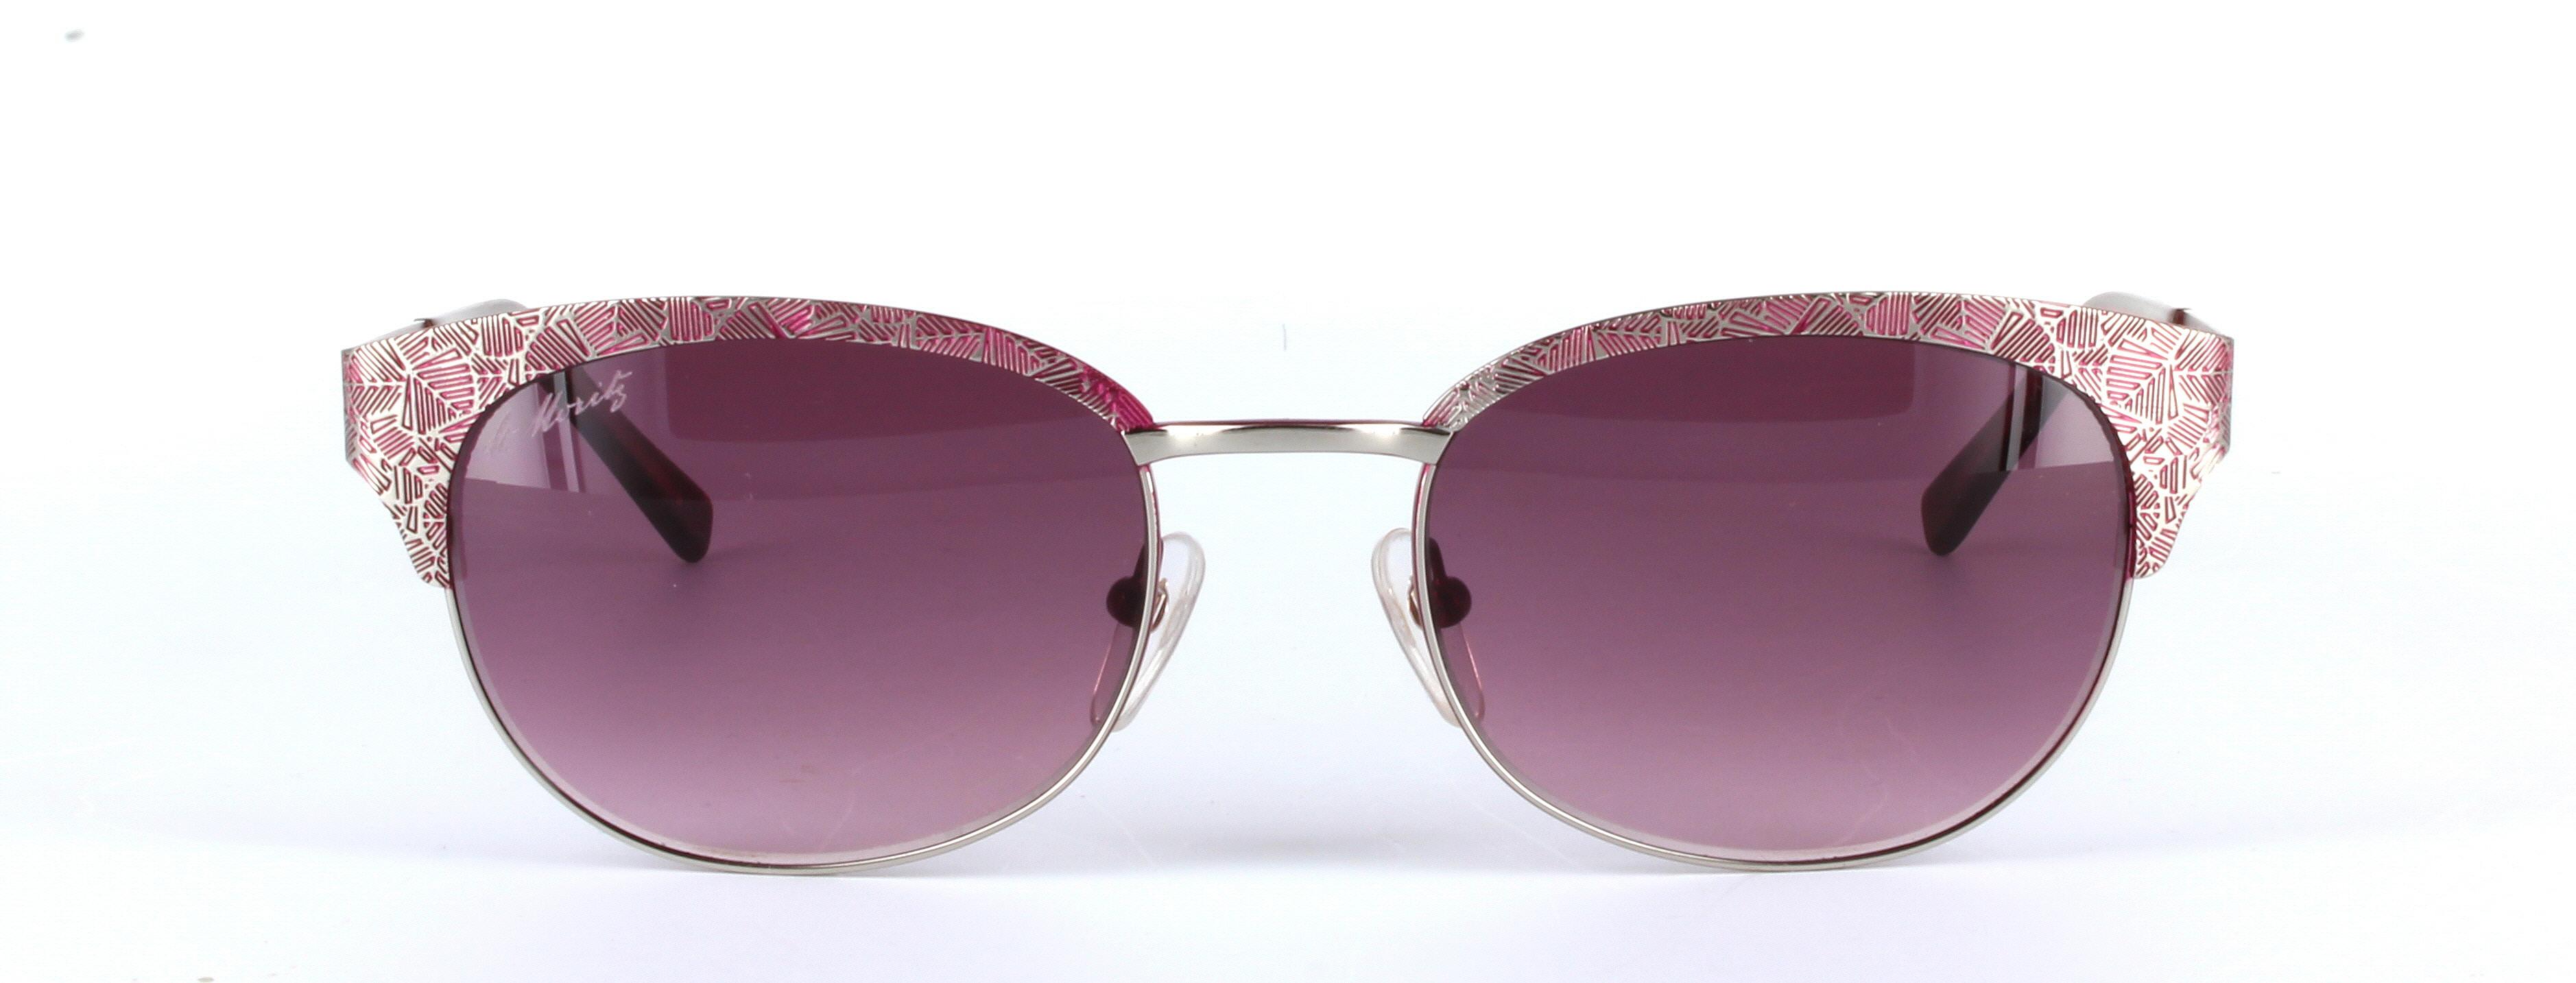 St Moritz Ladies sunglasses image 5